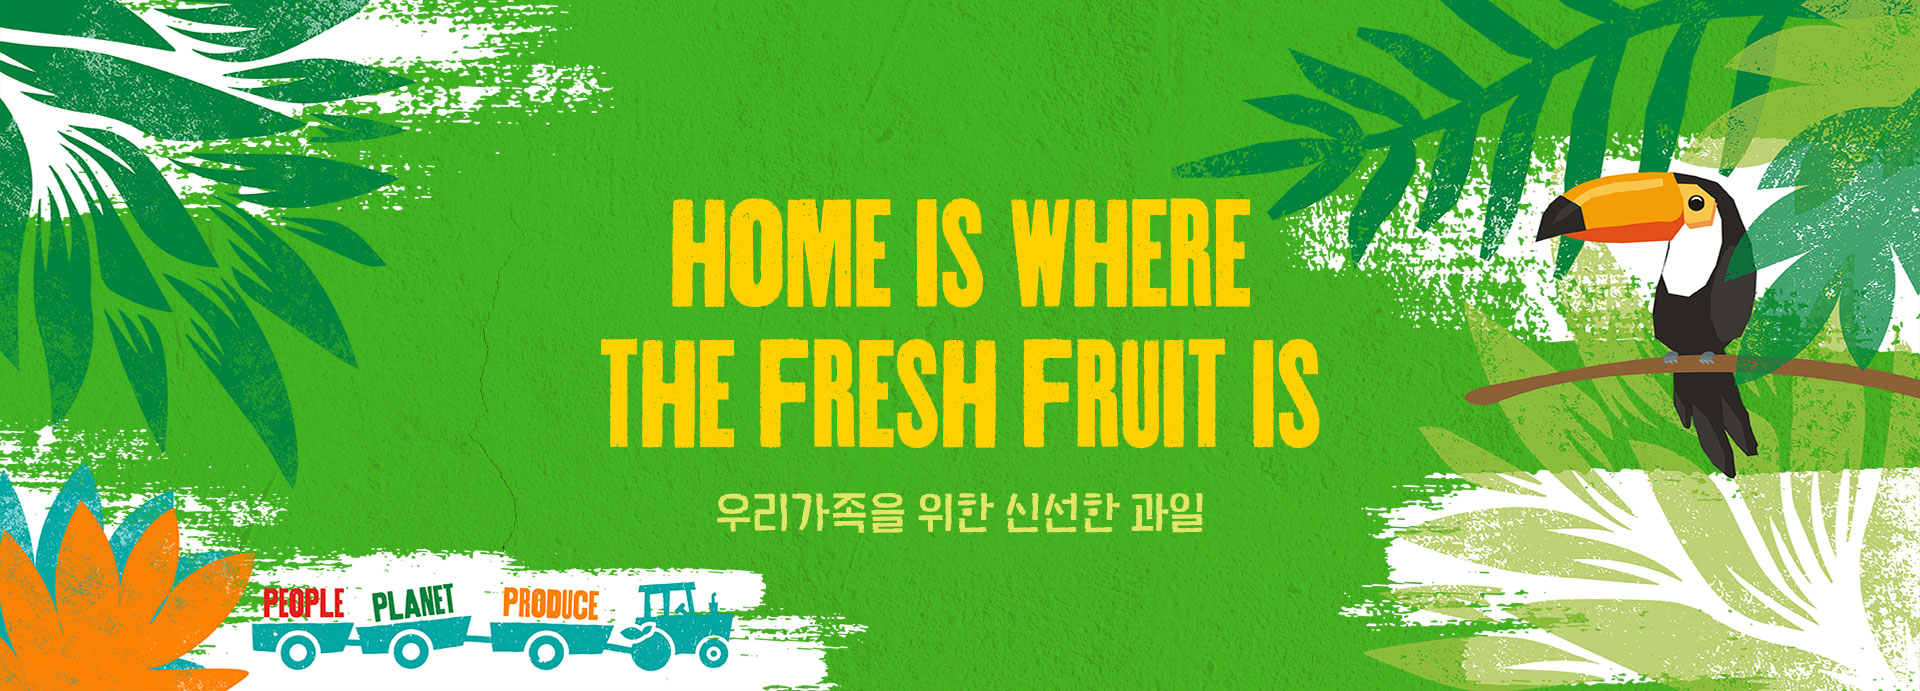 HOME IS WHERE THE FRESH FRUIT IS 우리가족을 위한 신선한 과일